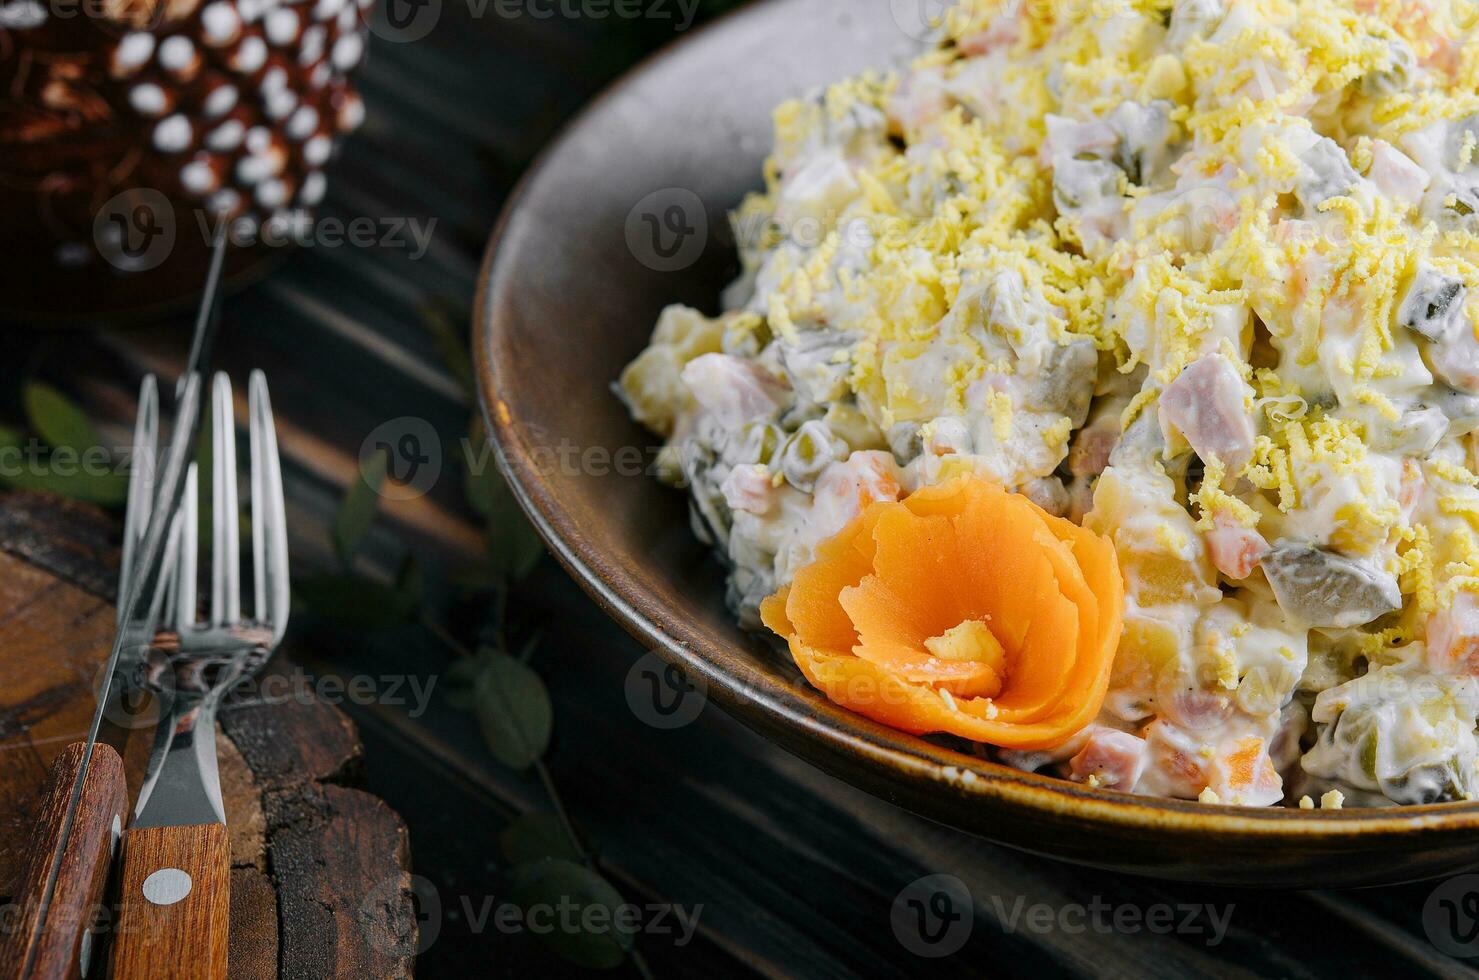 Fresh salad olivier in a ceramic bowl photo